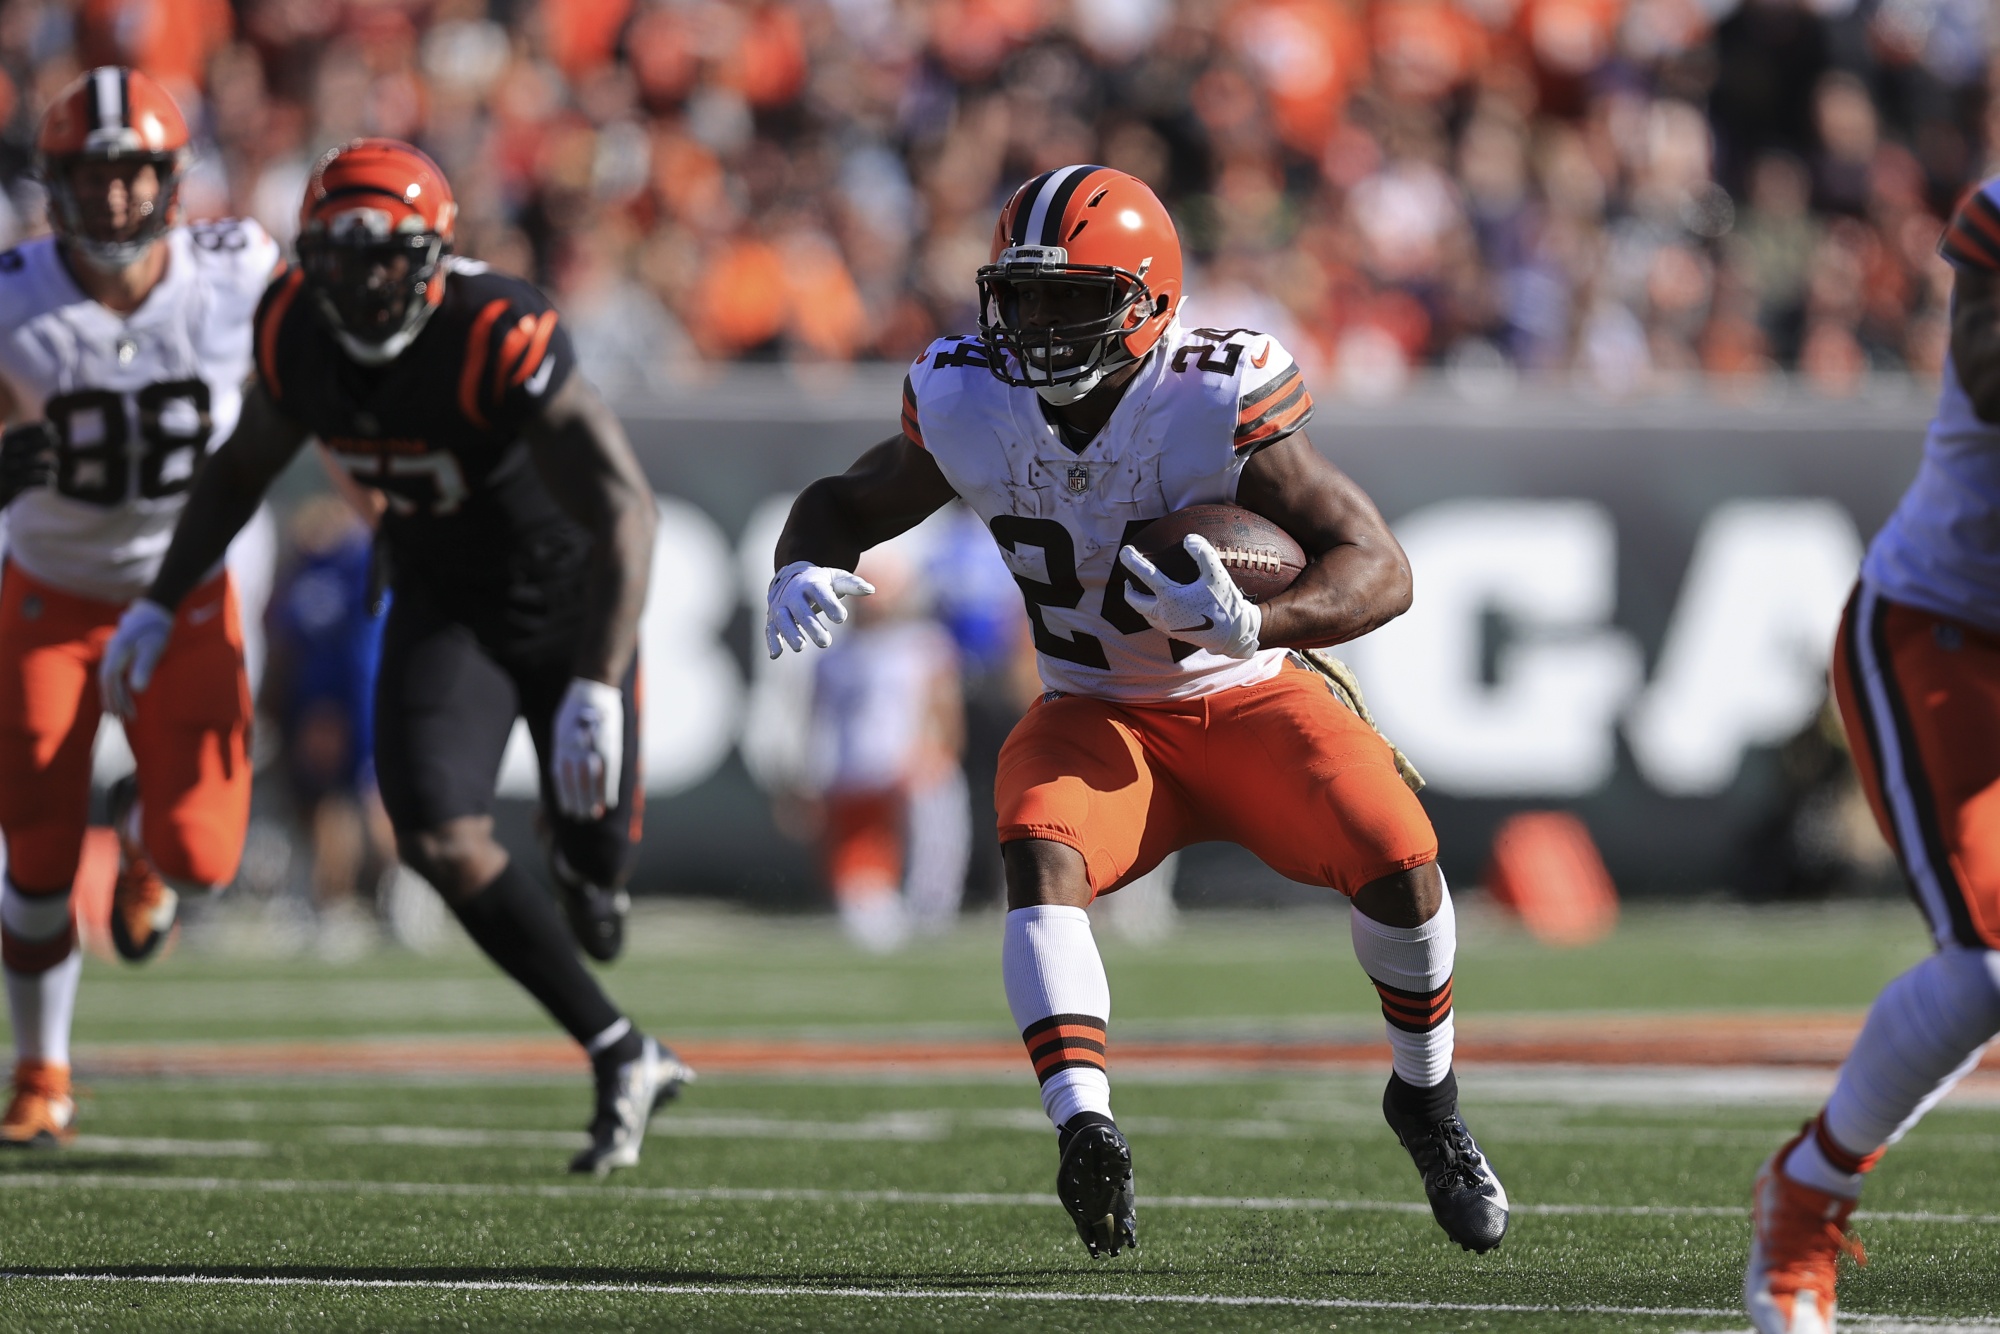 In photos: NFL: Cleveland Browns overwhelm Cincinnati Bengals